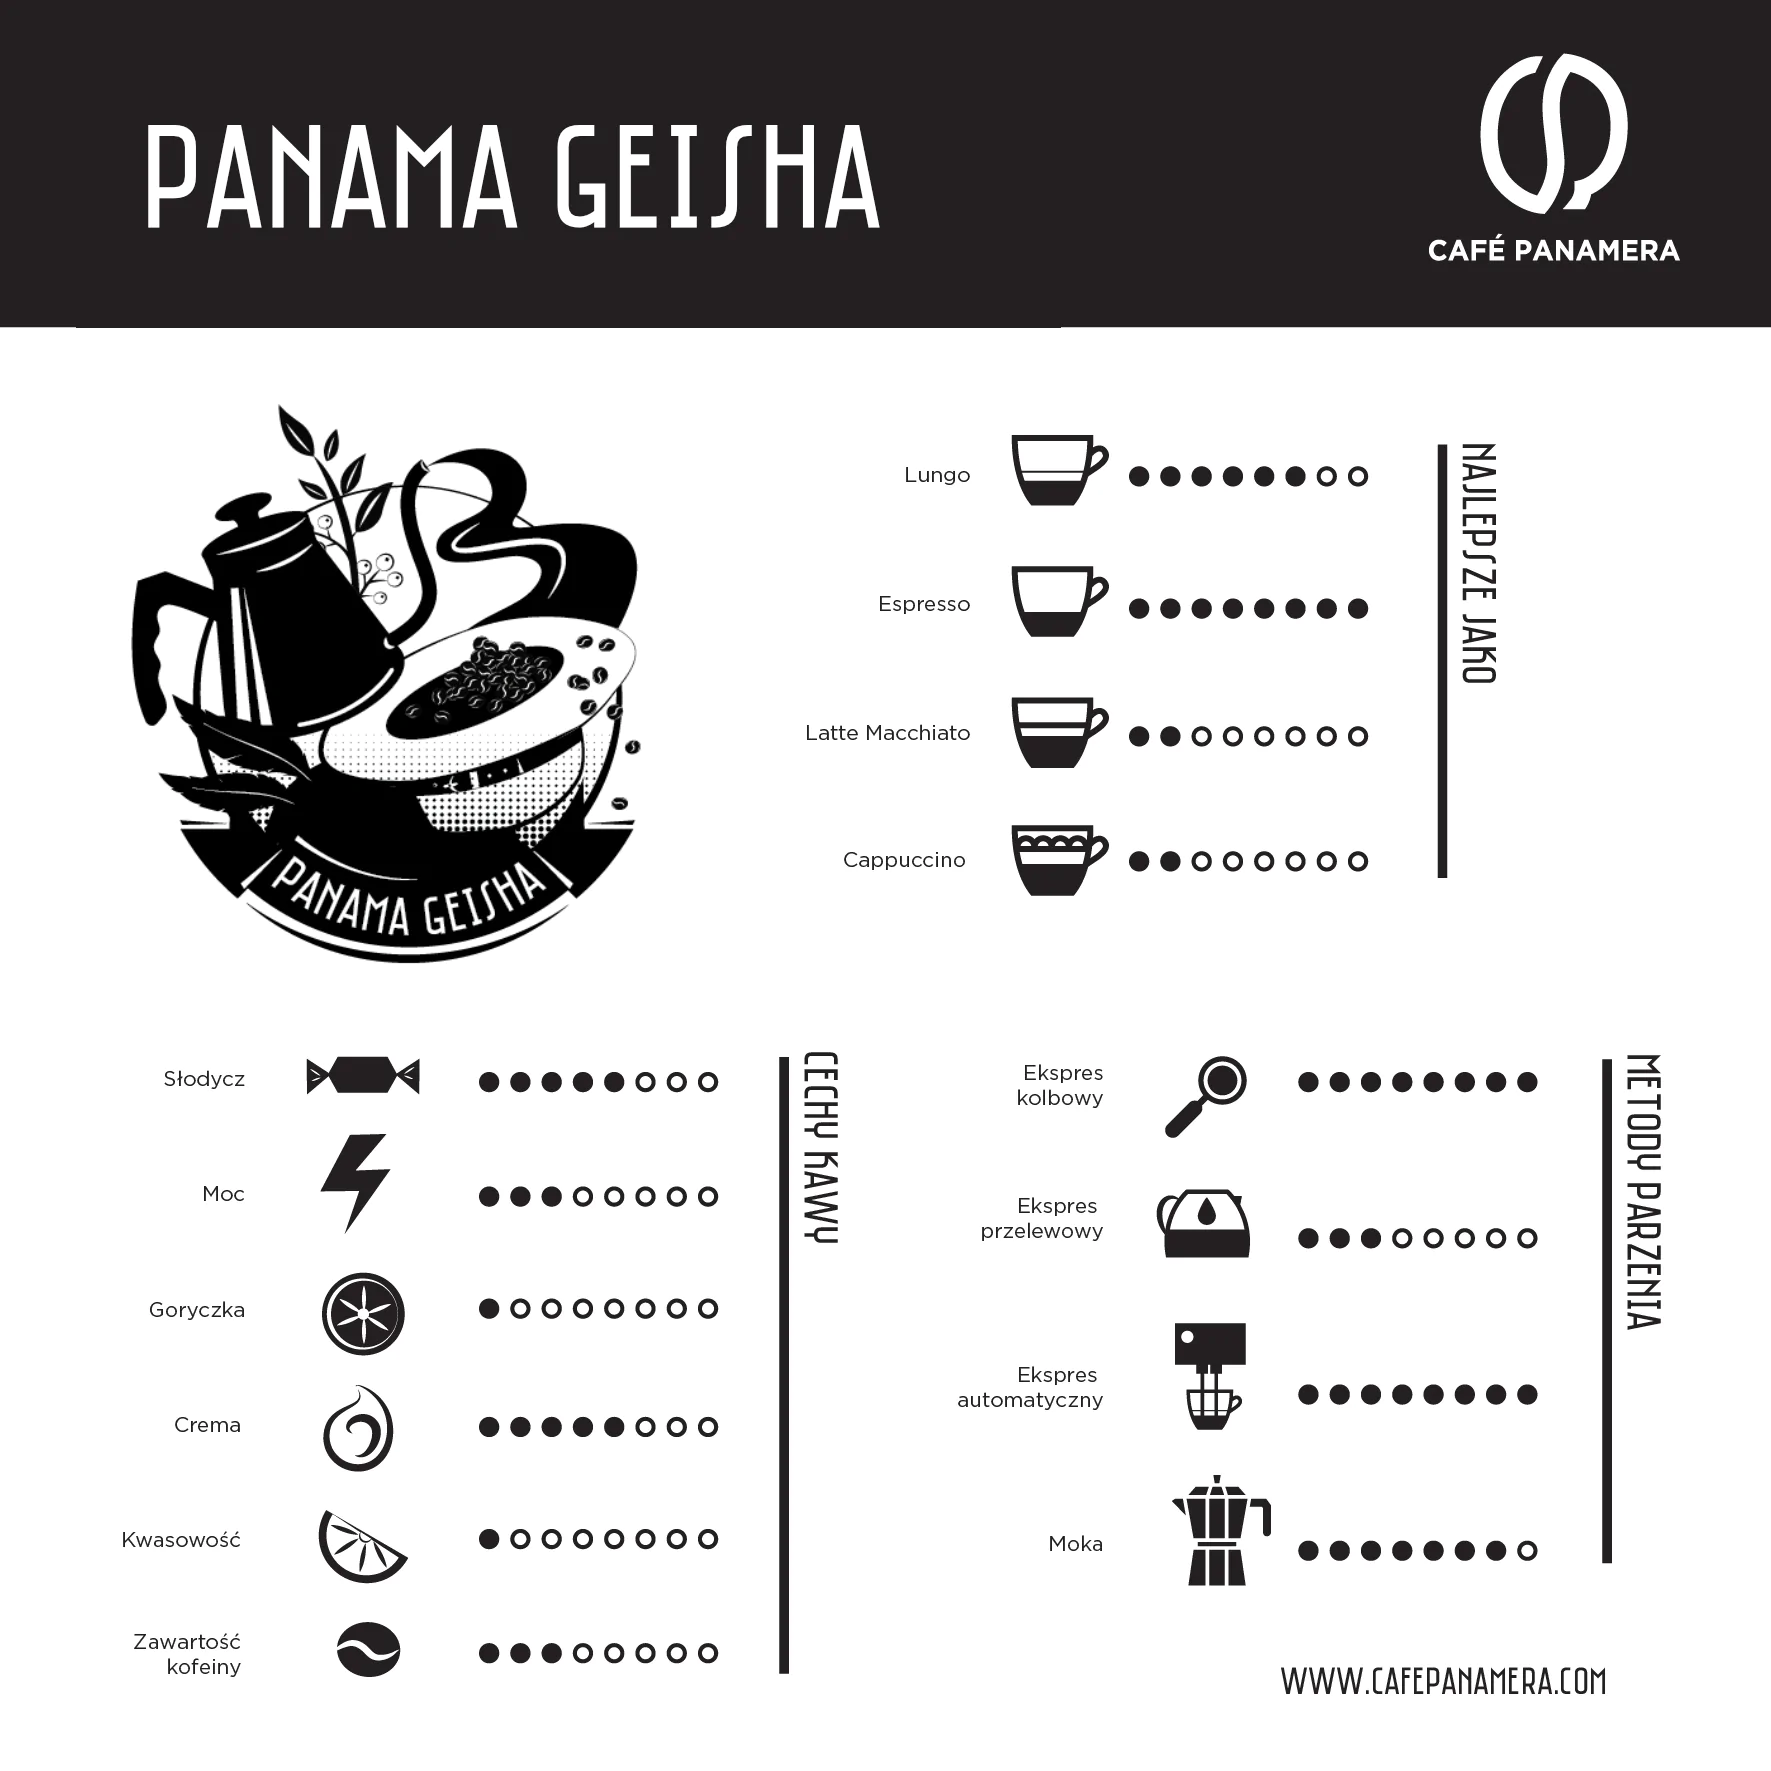 Cechy kaw - Panama Geisha